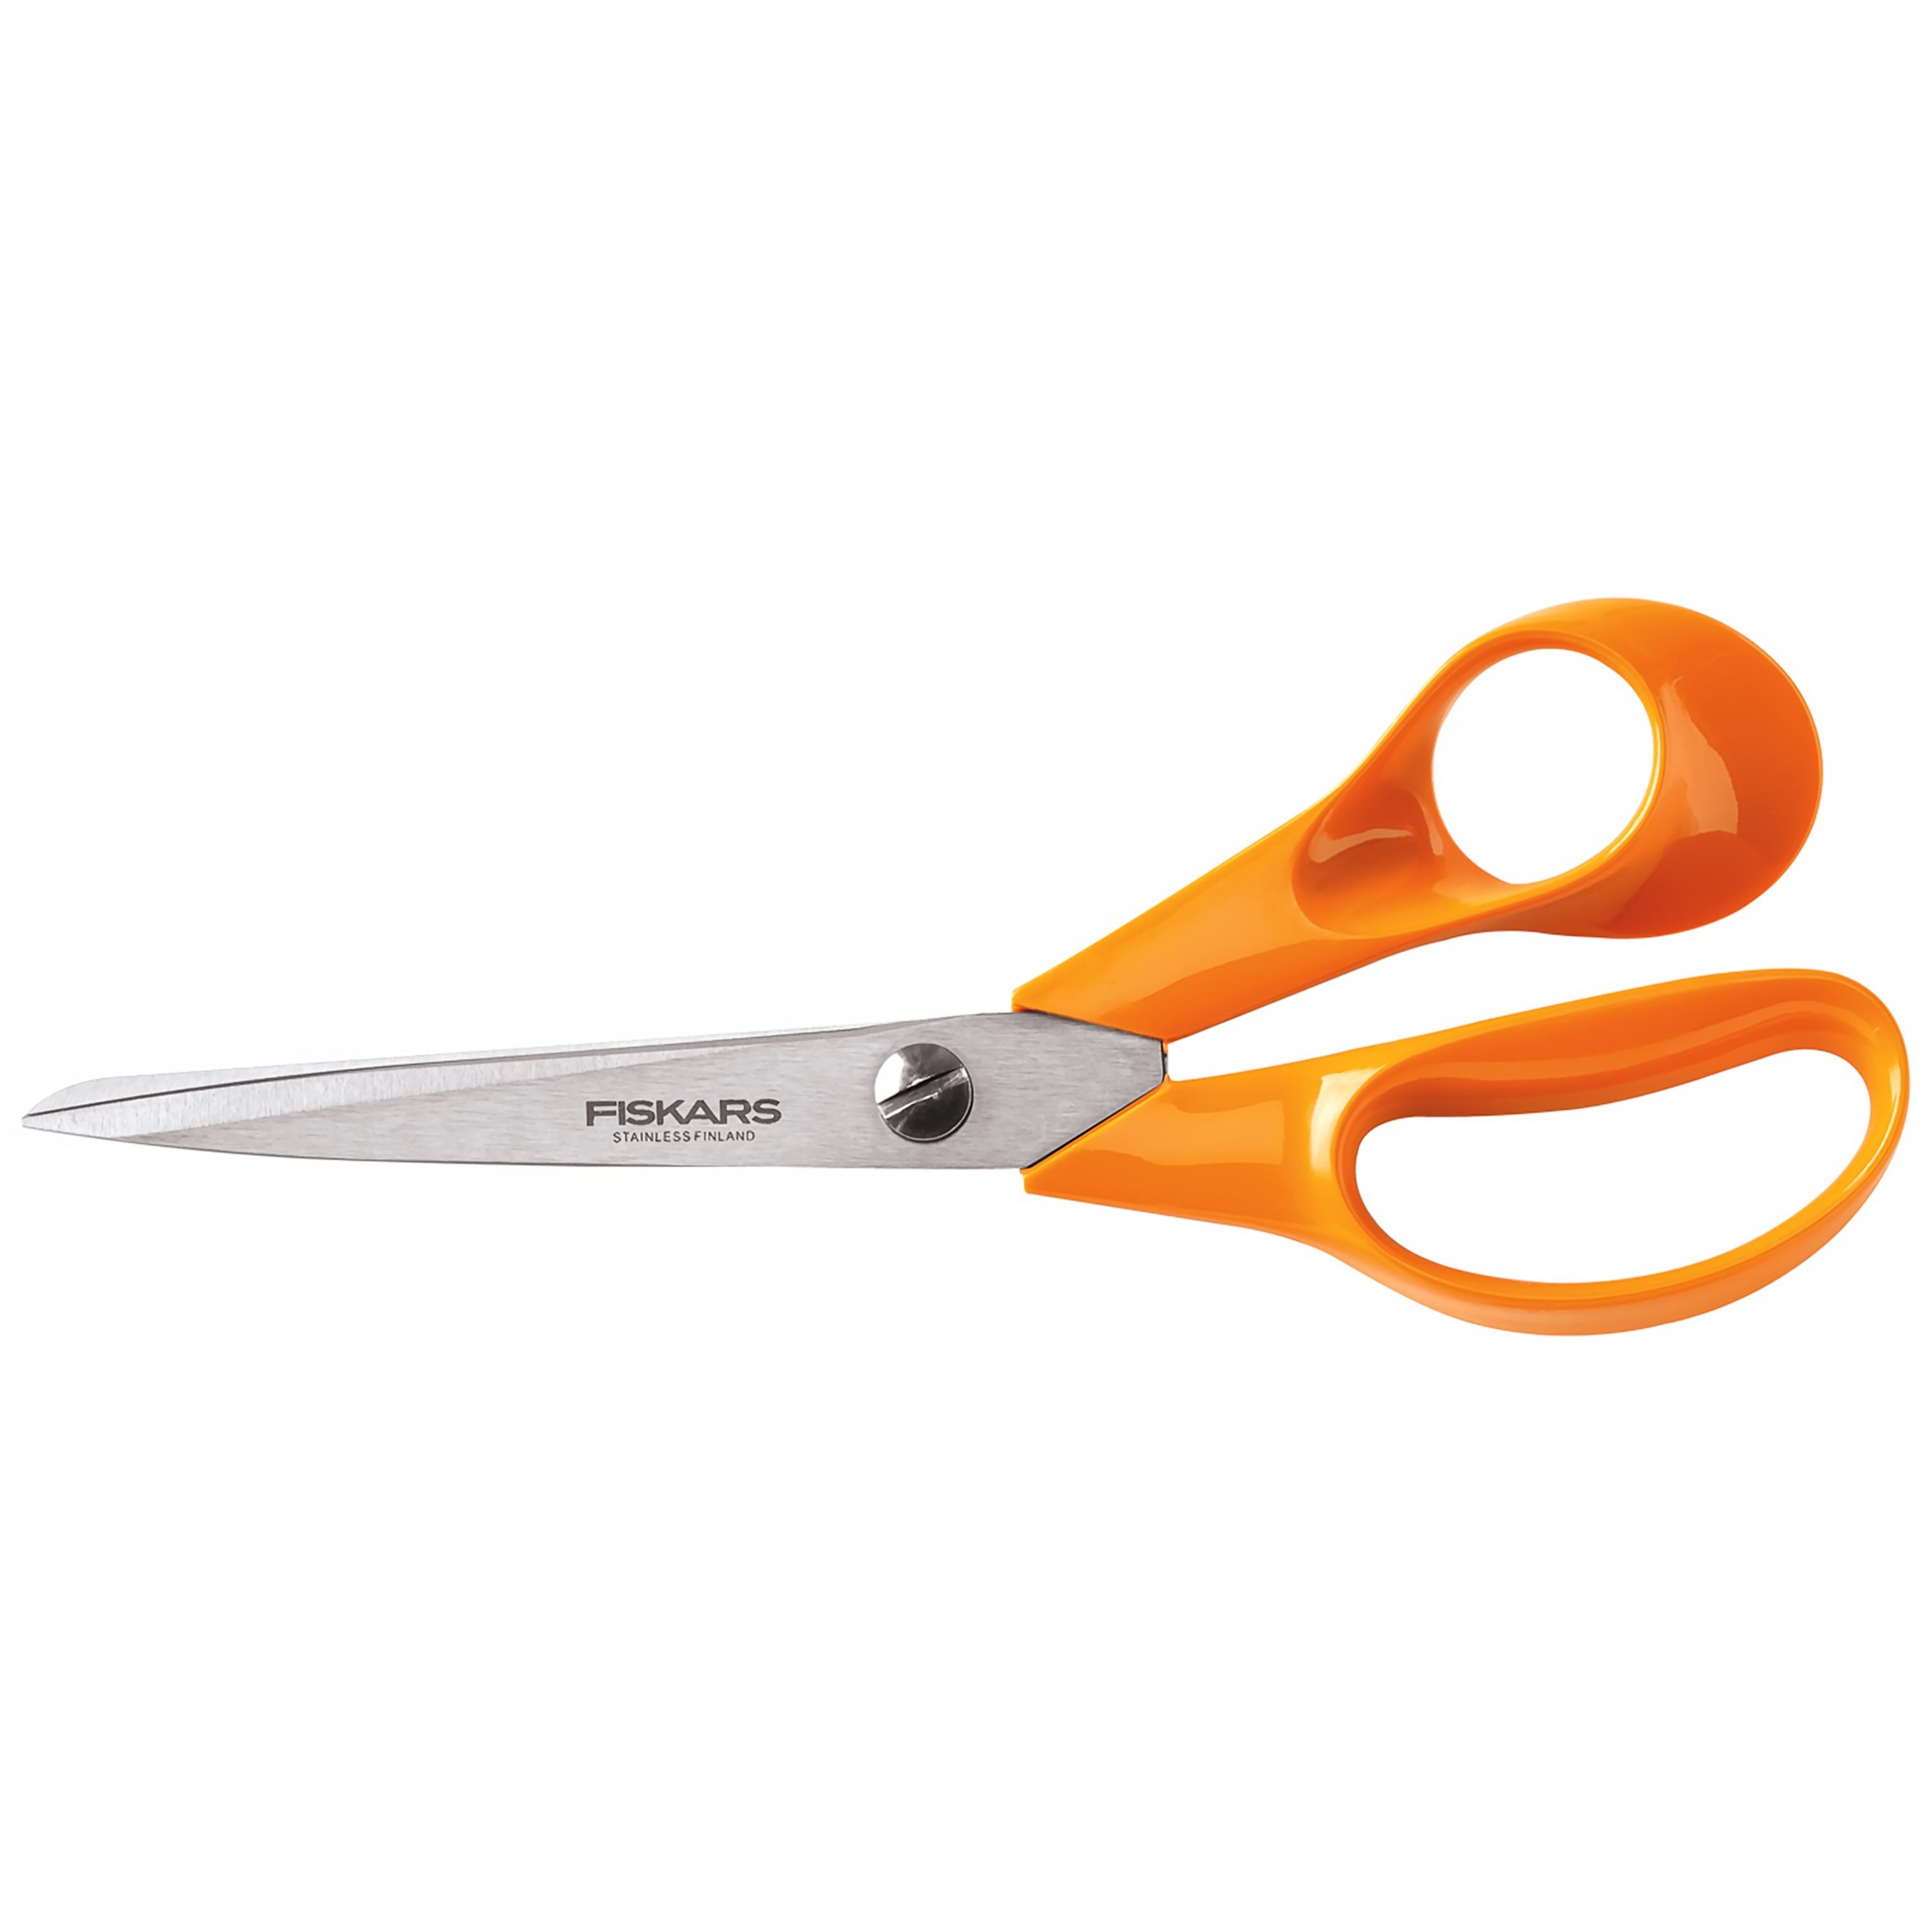 Fiskars Specialty Scissors with Magnet - FSK1238637097 